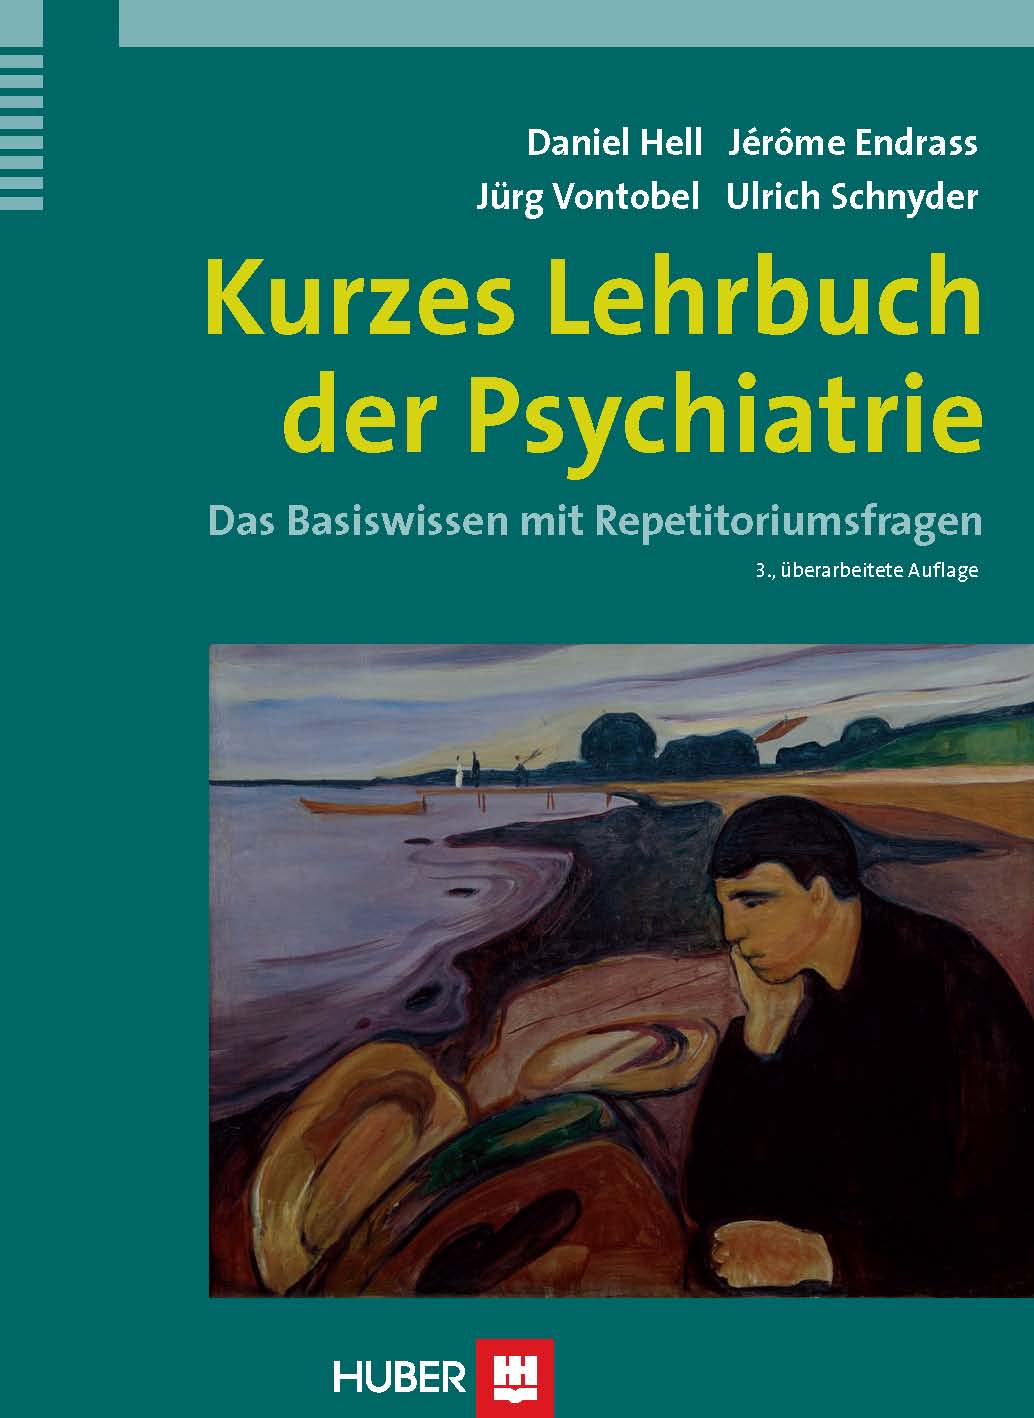 Kurzes Lehrbuch der Psychiatrie